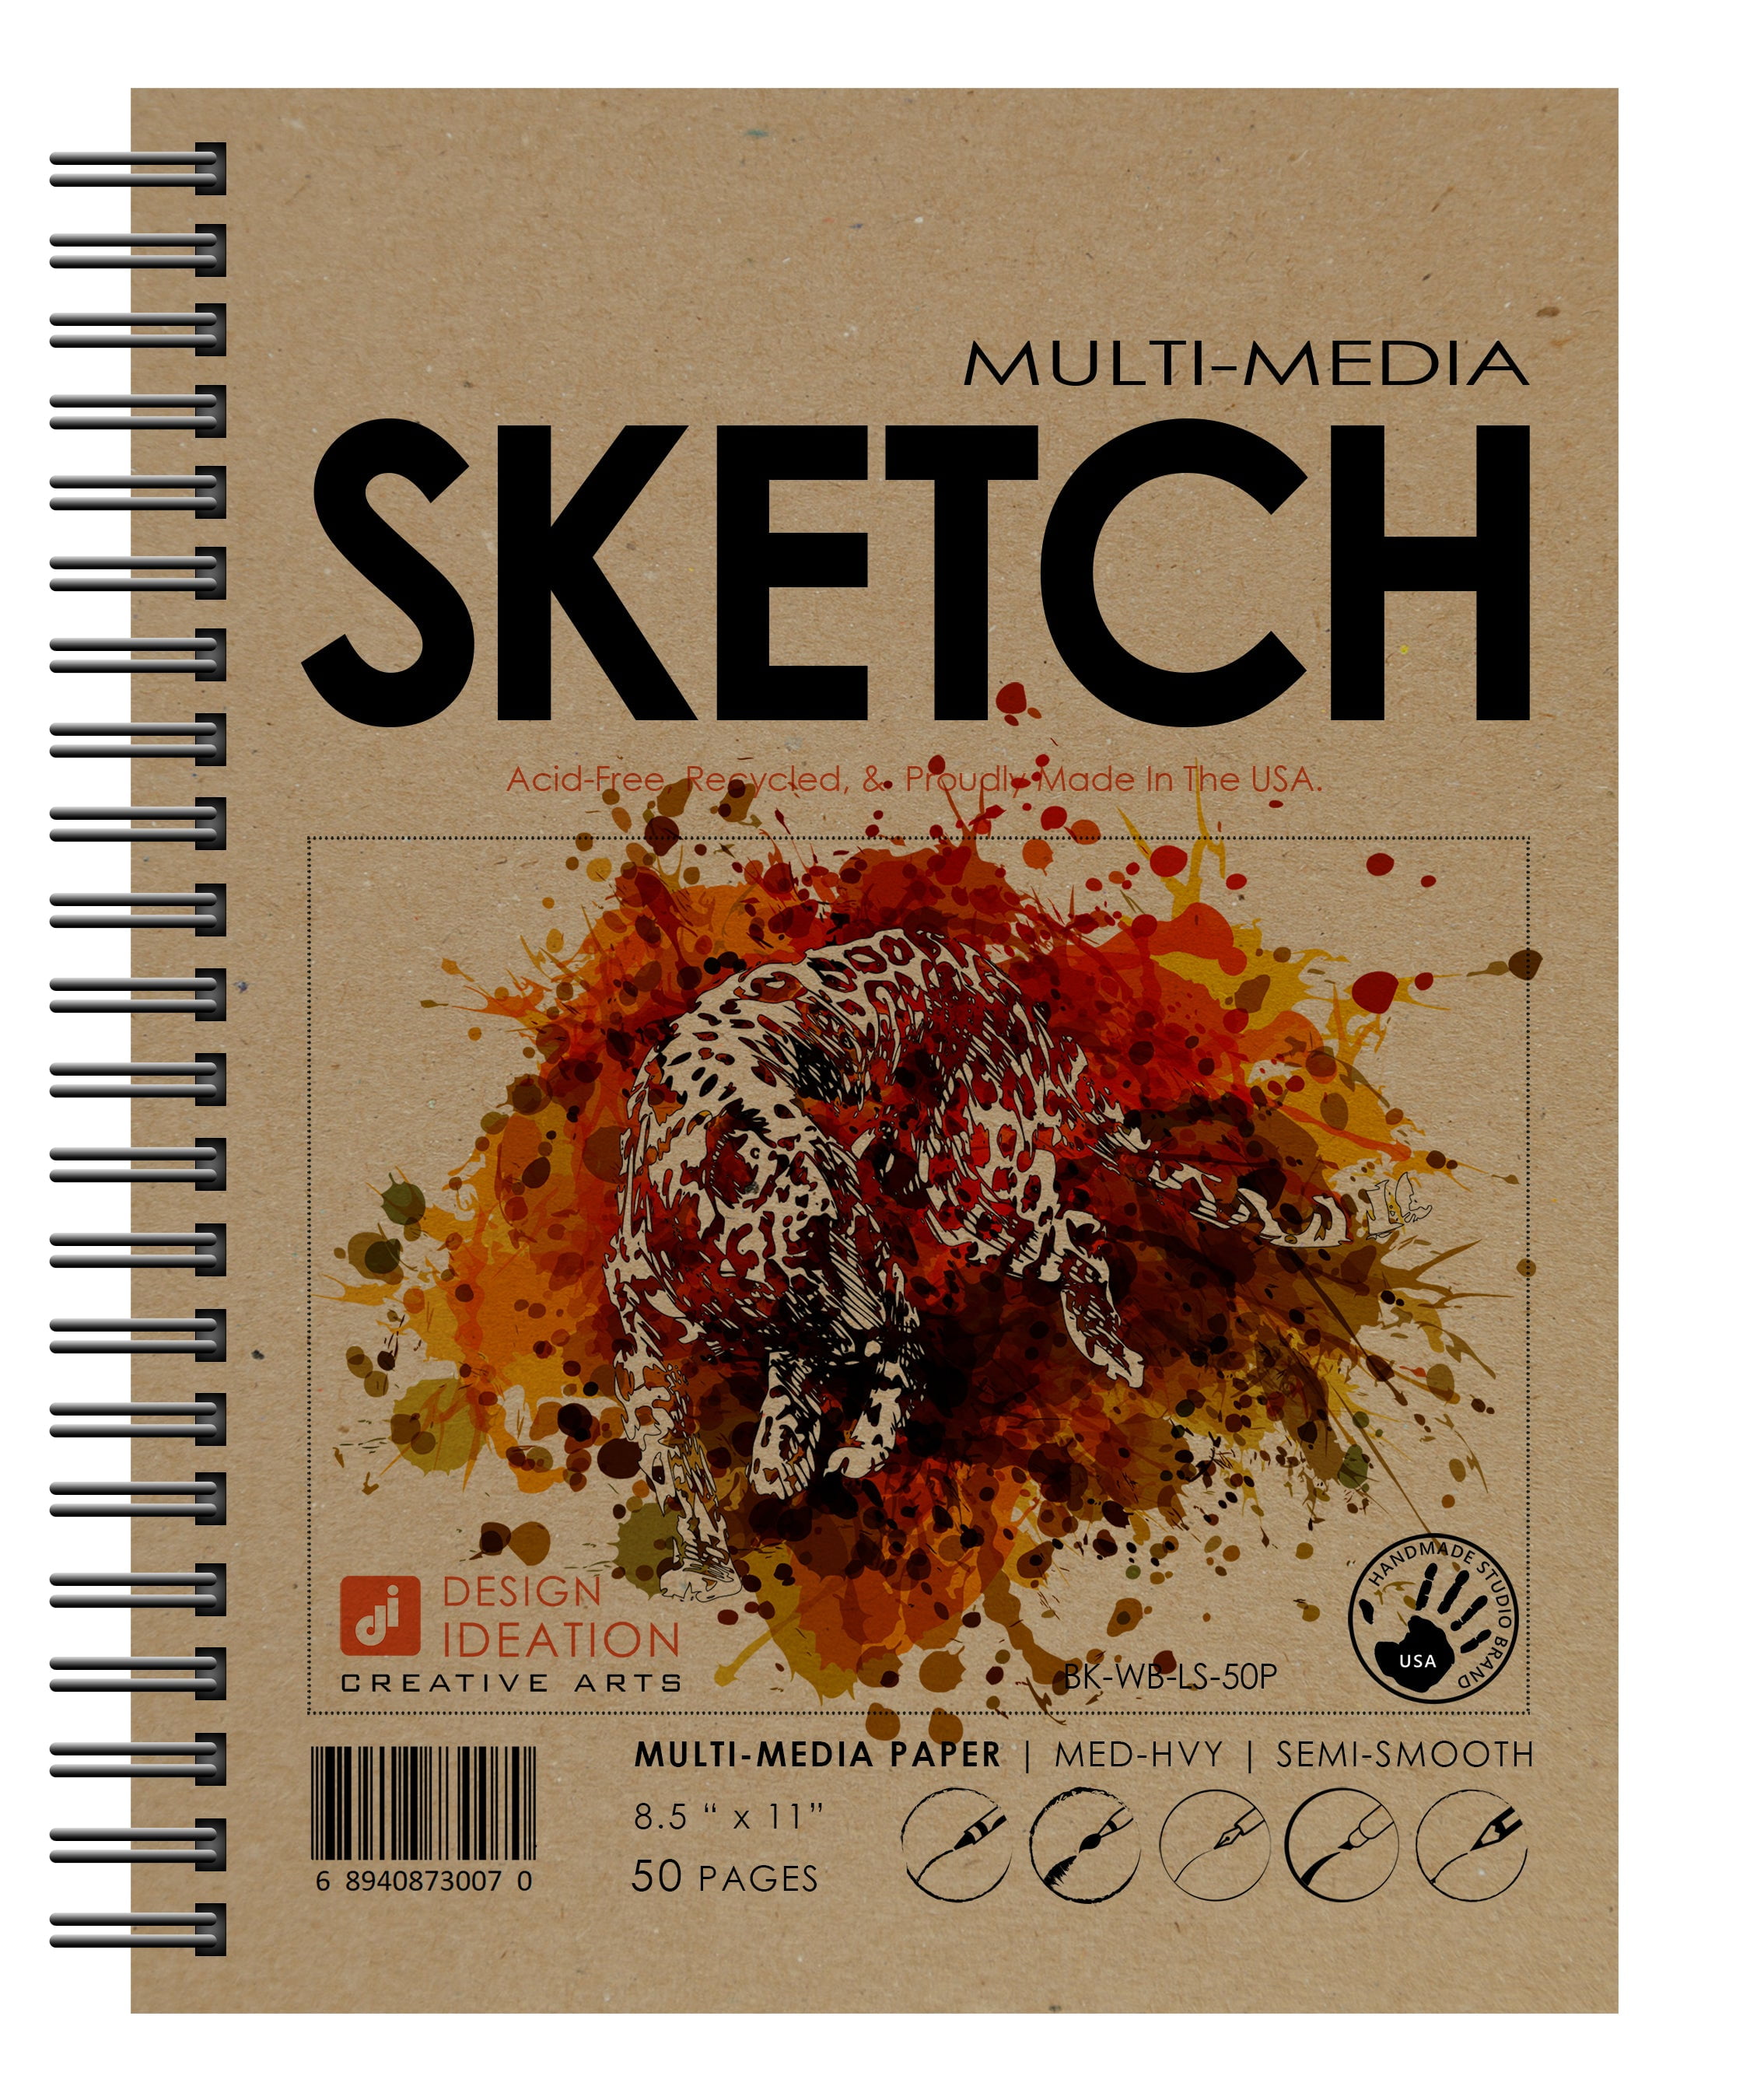 4 x 6 Yellow Linen Hardbound Sketchbook Journal